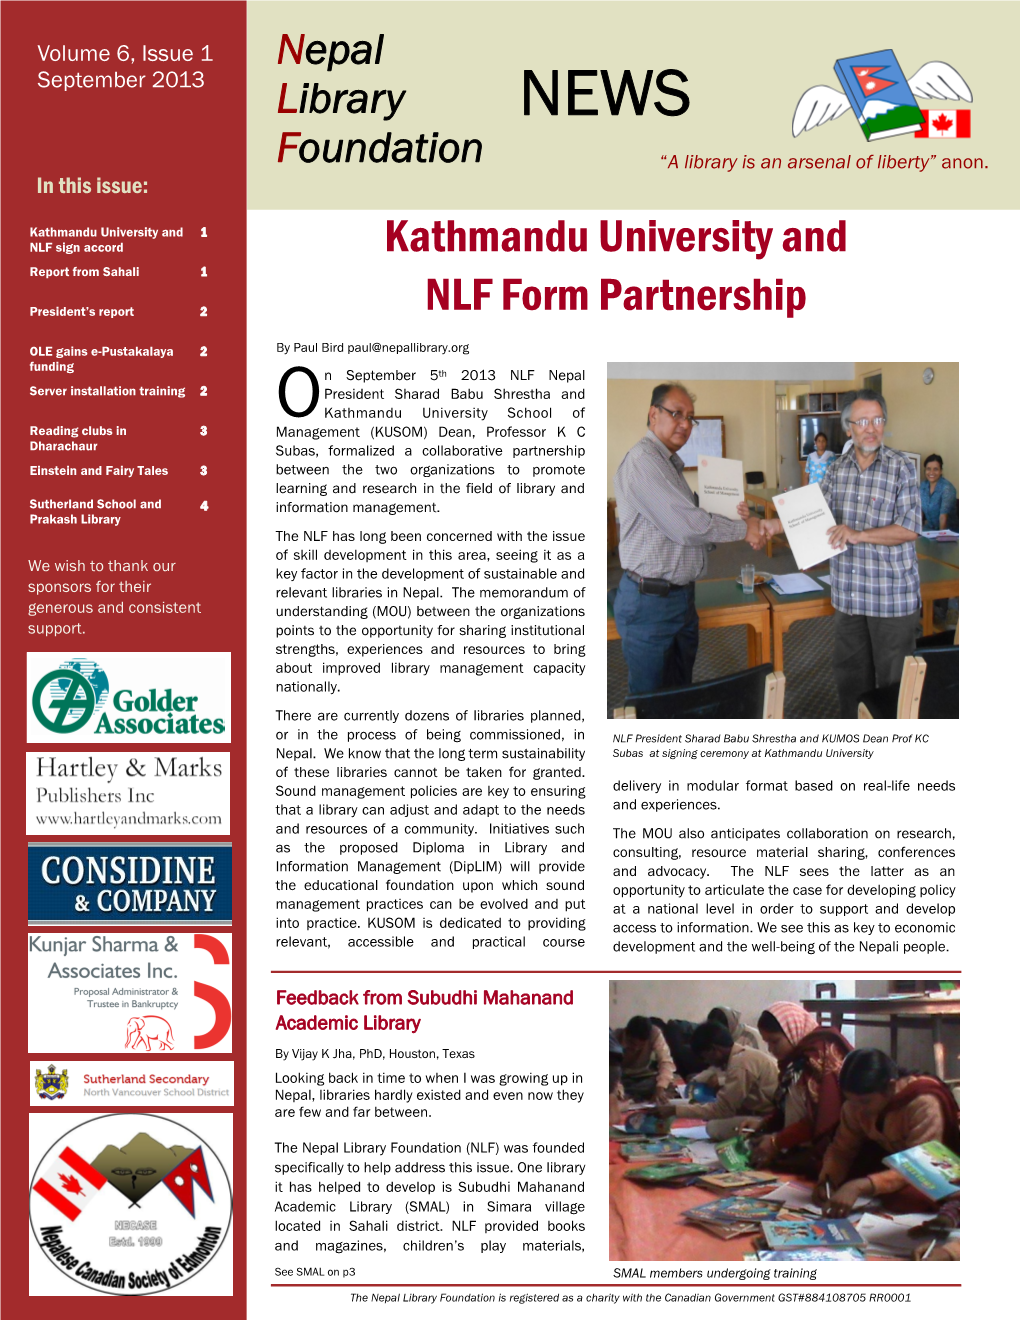 Kathmandu University and NLF Form Partnership